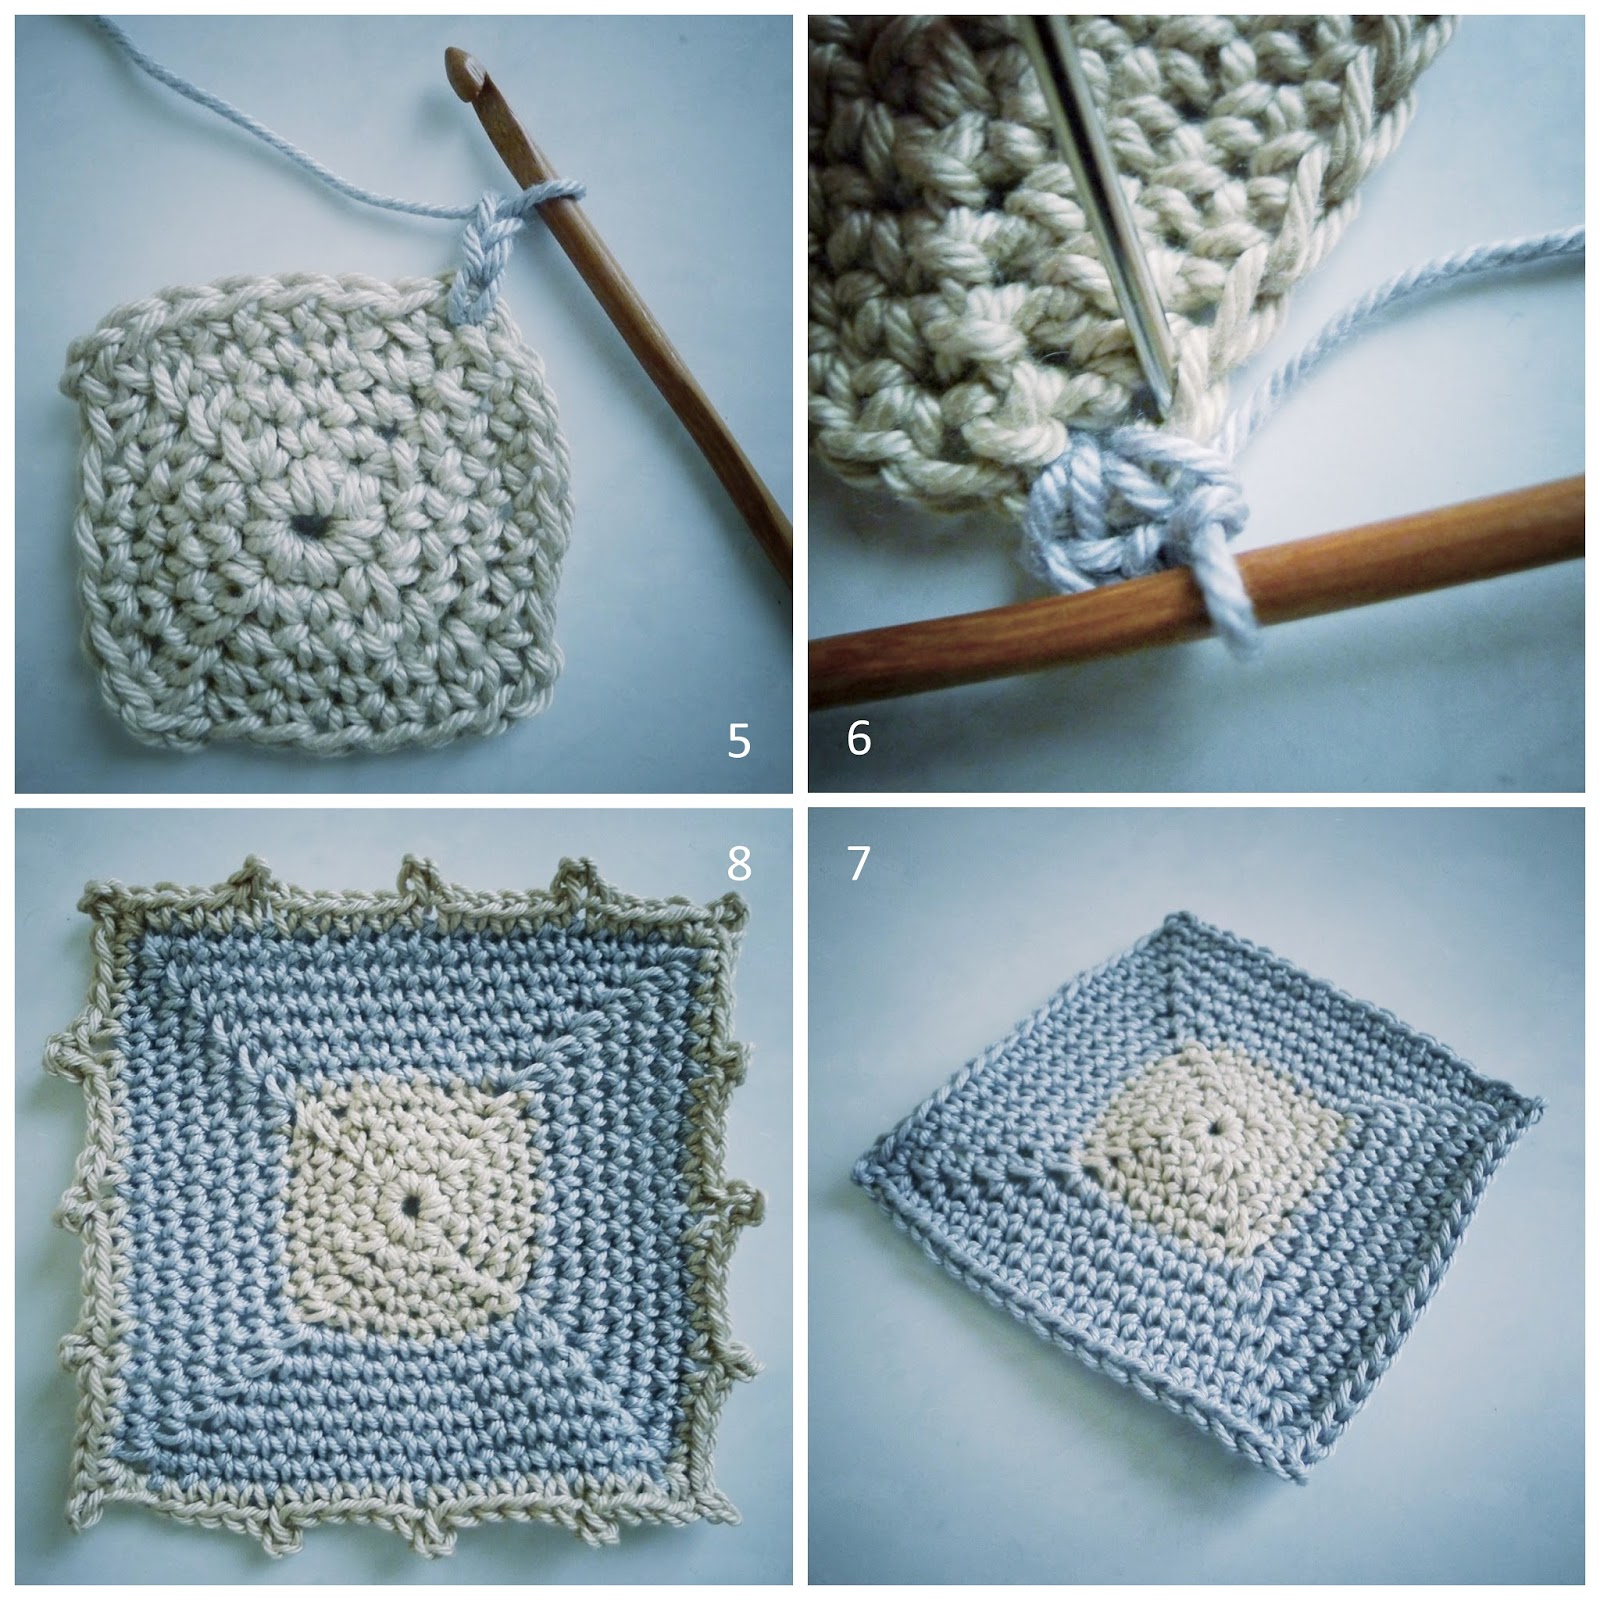 pigtails: Single Crochet Square Pattern